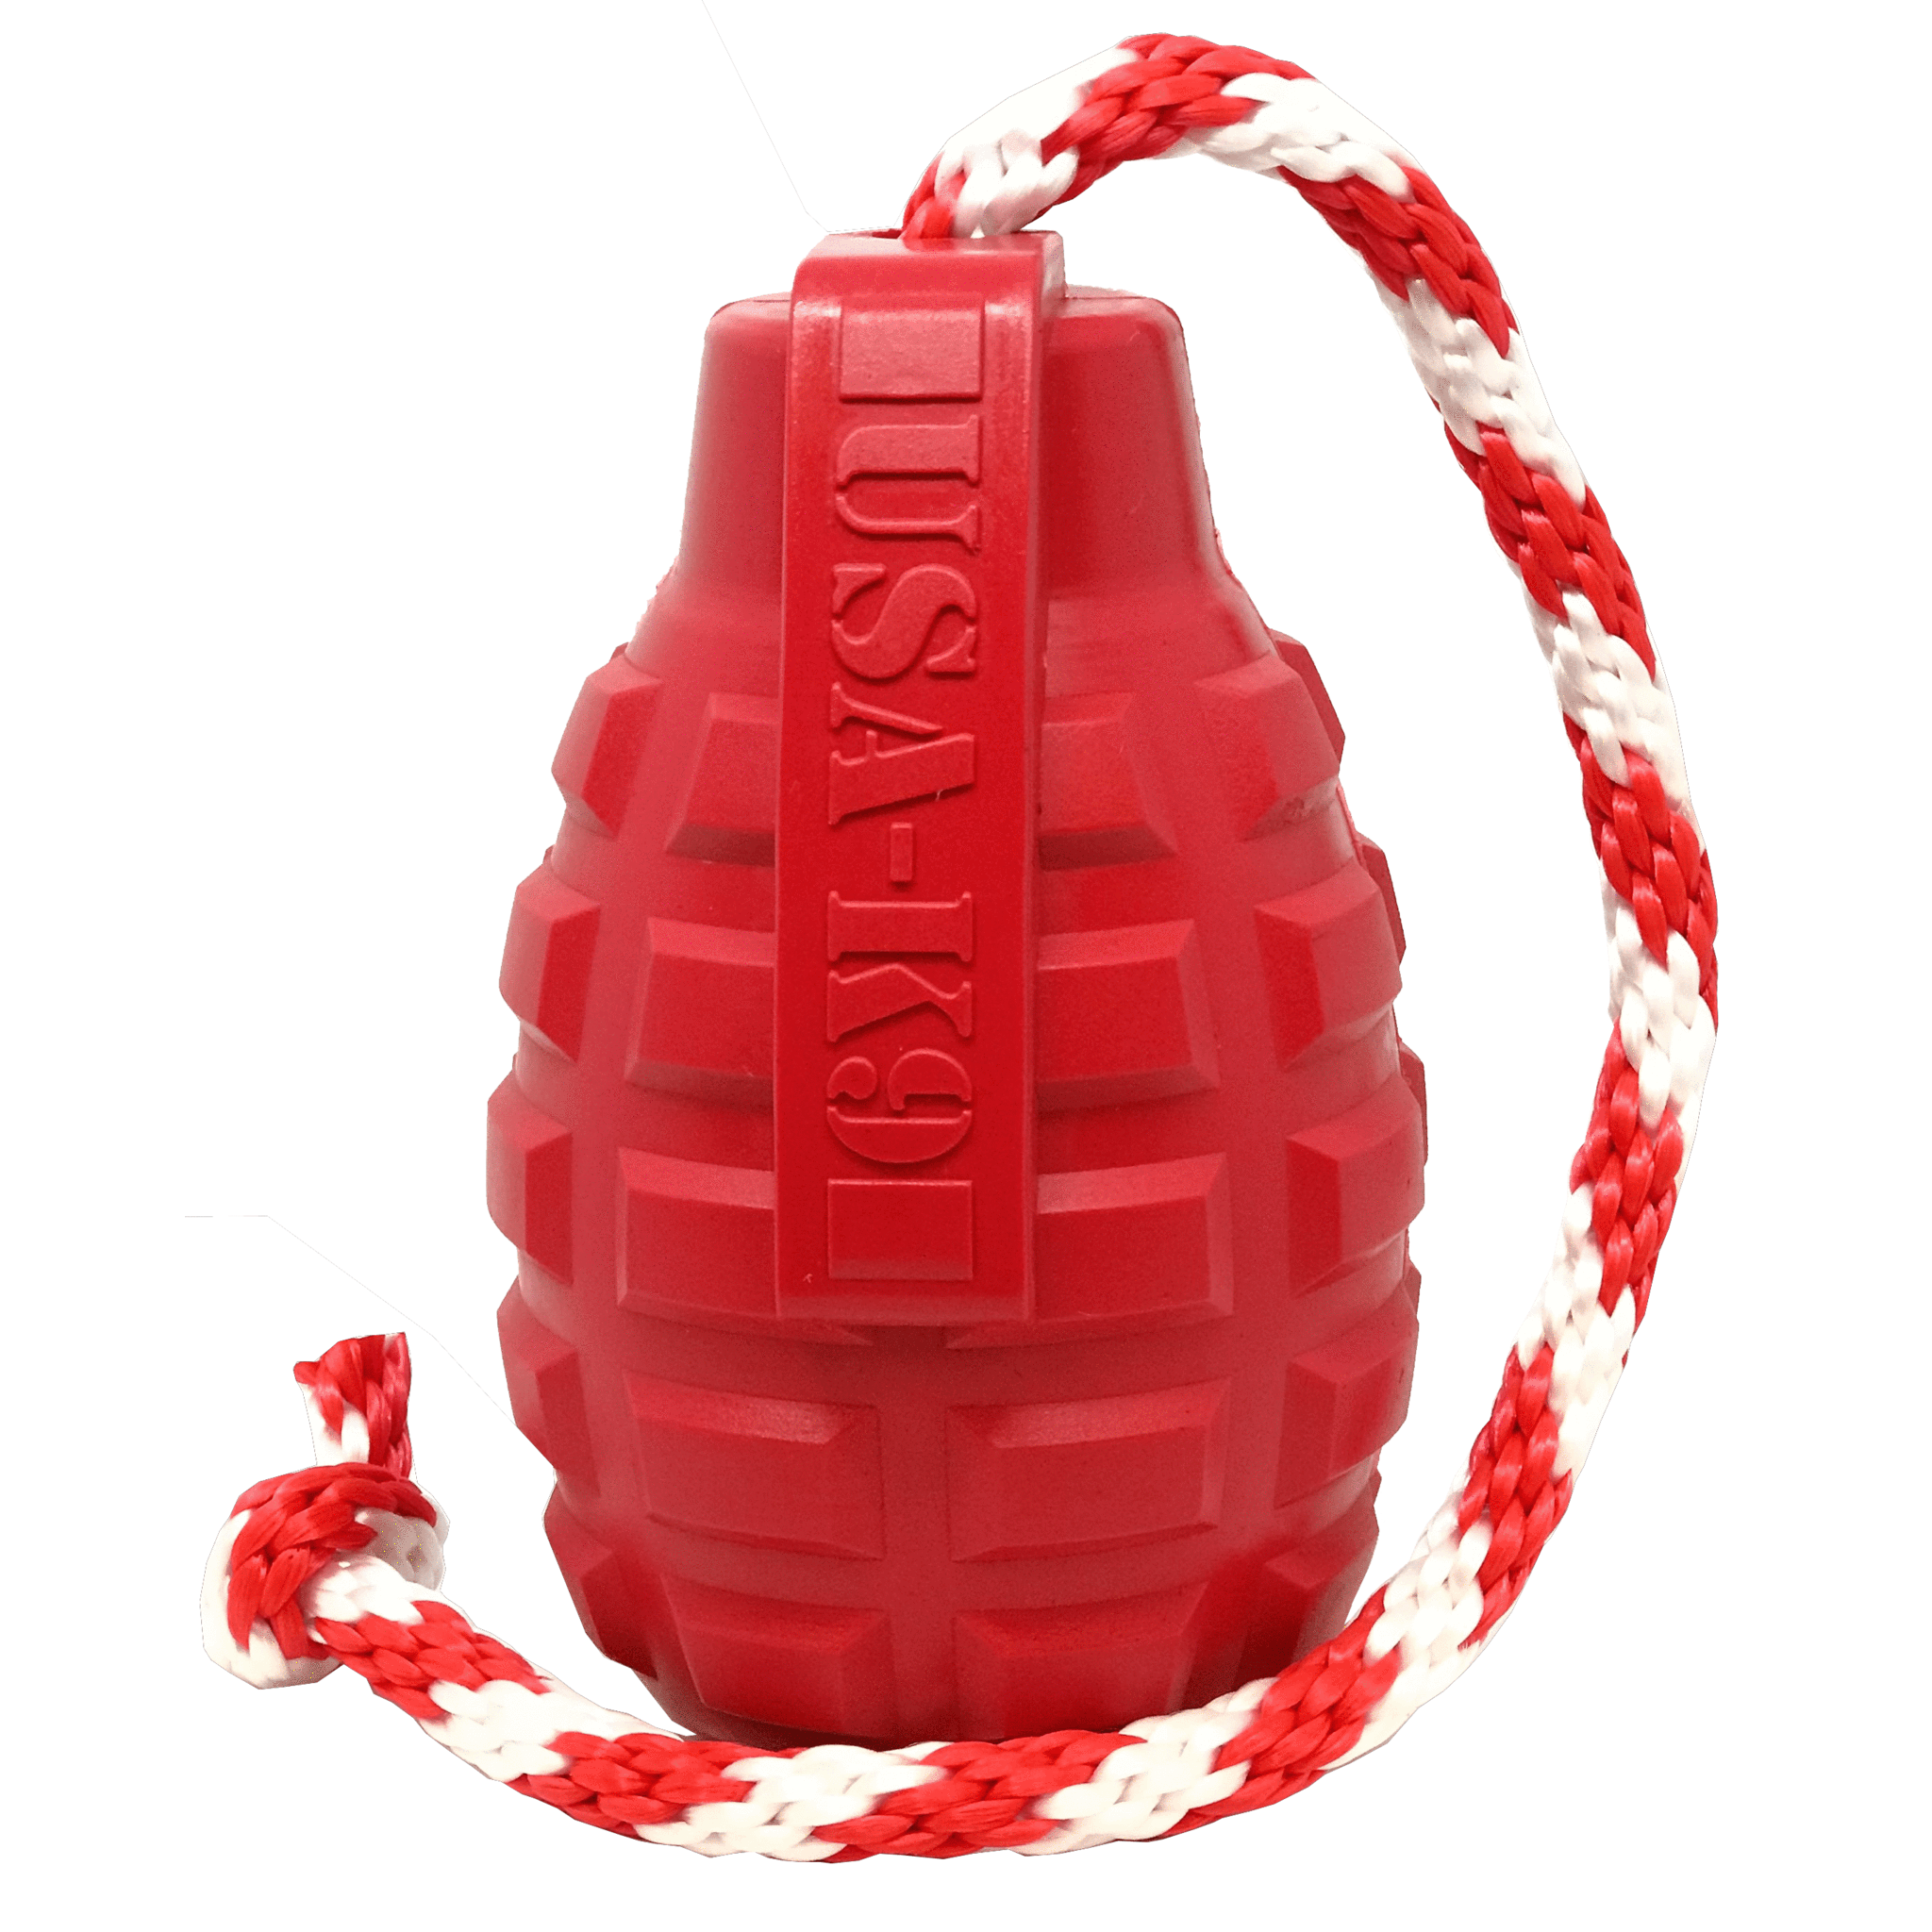 USA-K9 Grenade  |  Durable Rubber Reward Toy